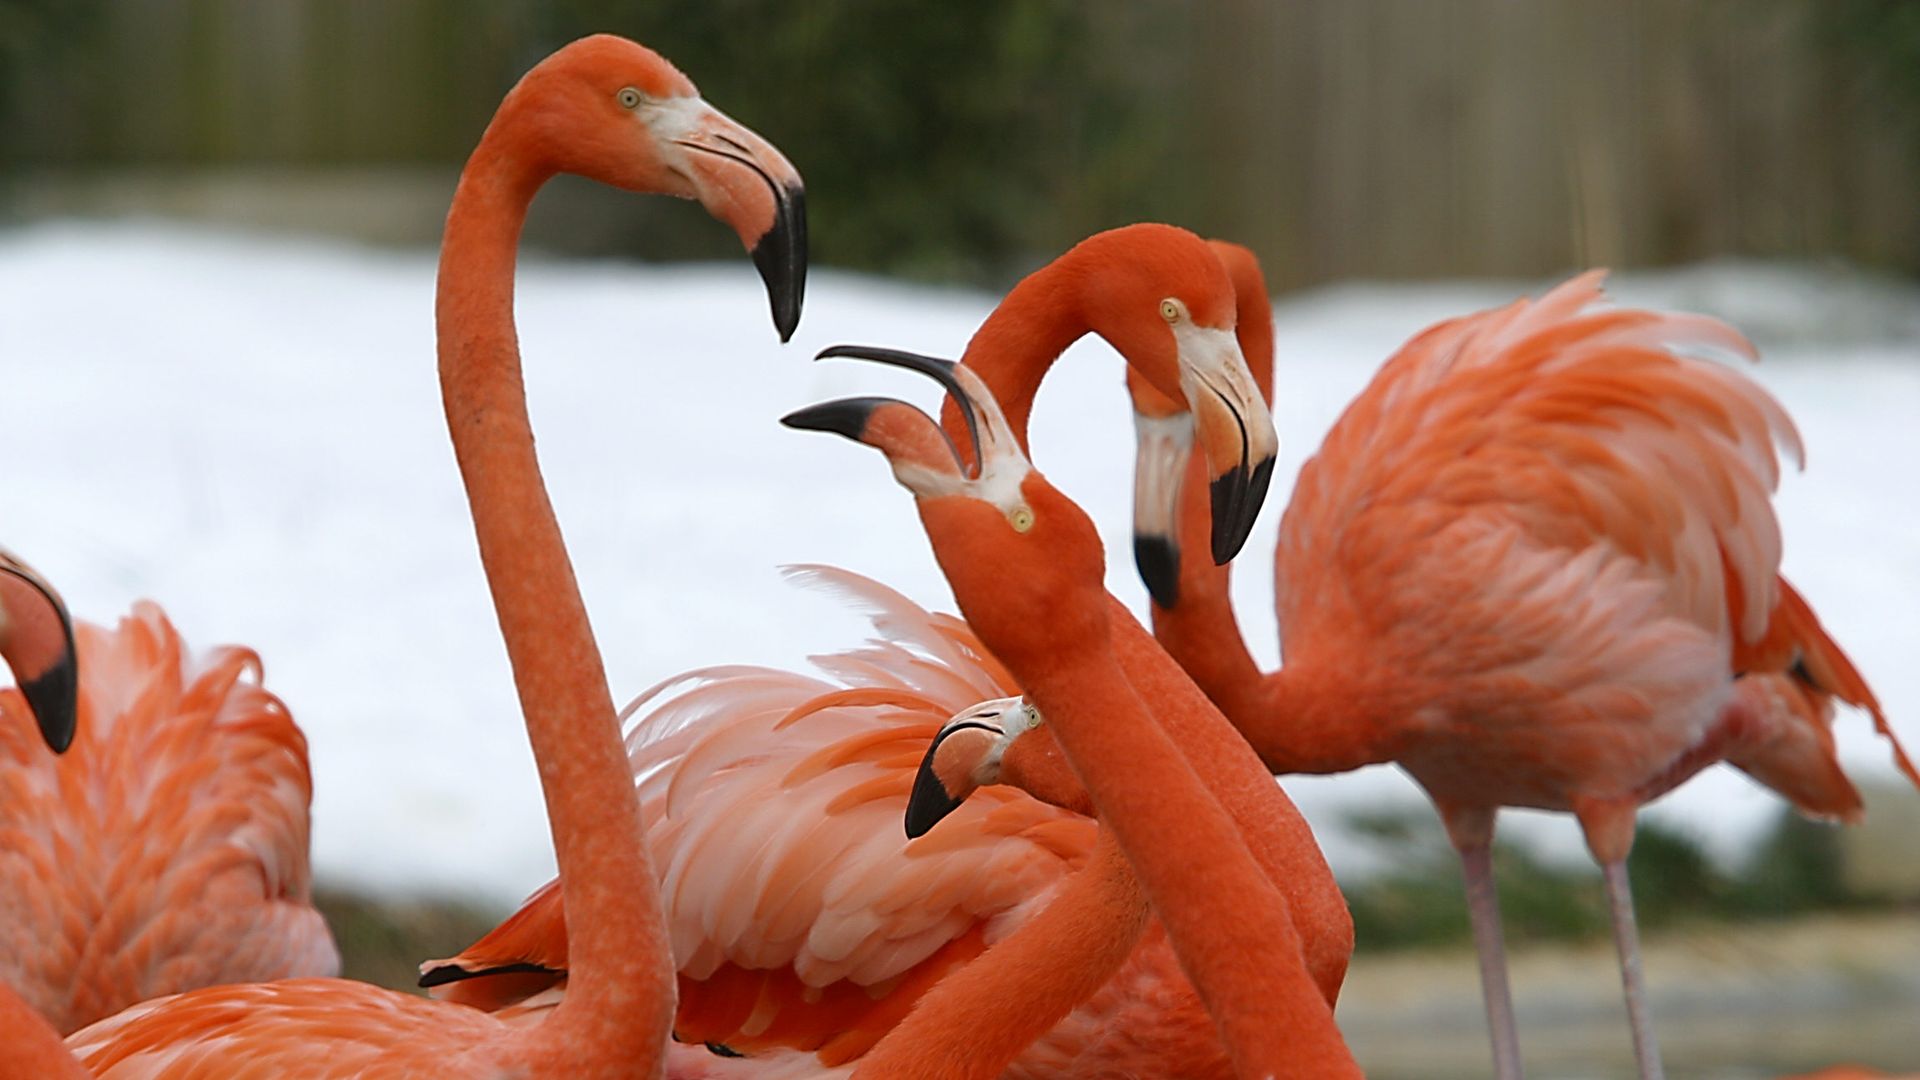 A group of Flamingos